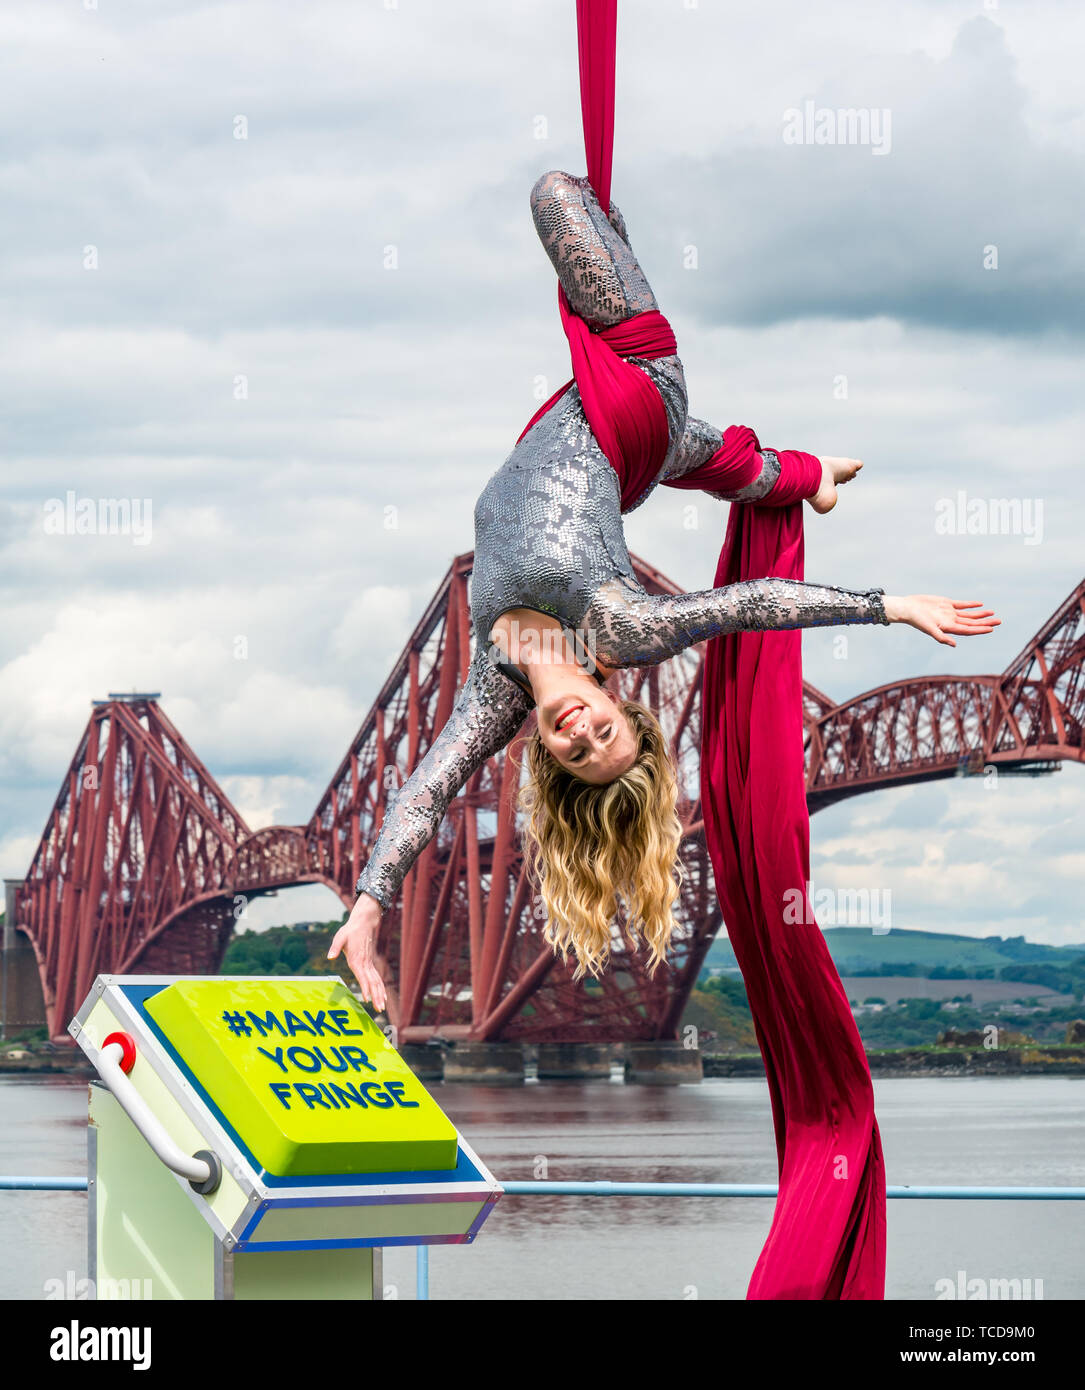 Antenne artist Blaise Donald startet Edinburgh Festival Fringe Programm & Franse Hashtag #MakeYourFringe an iconic Forth Rail Bridge, Schottland, Großbritannien Stockfoto